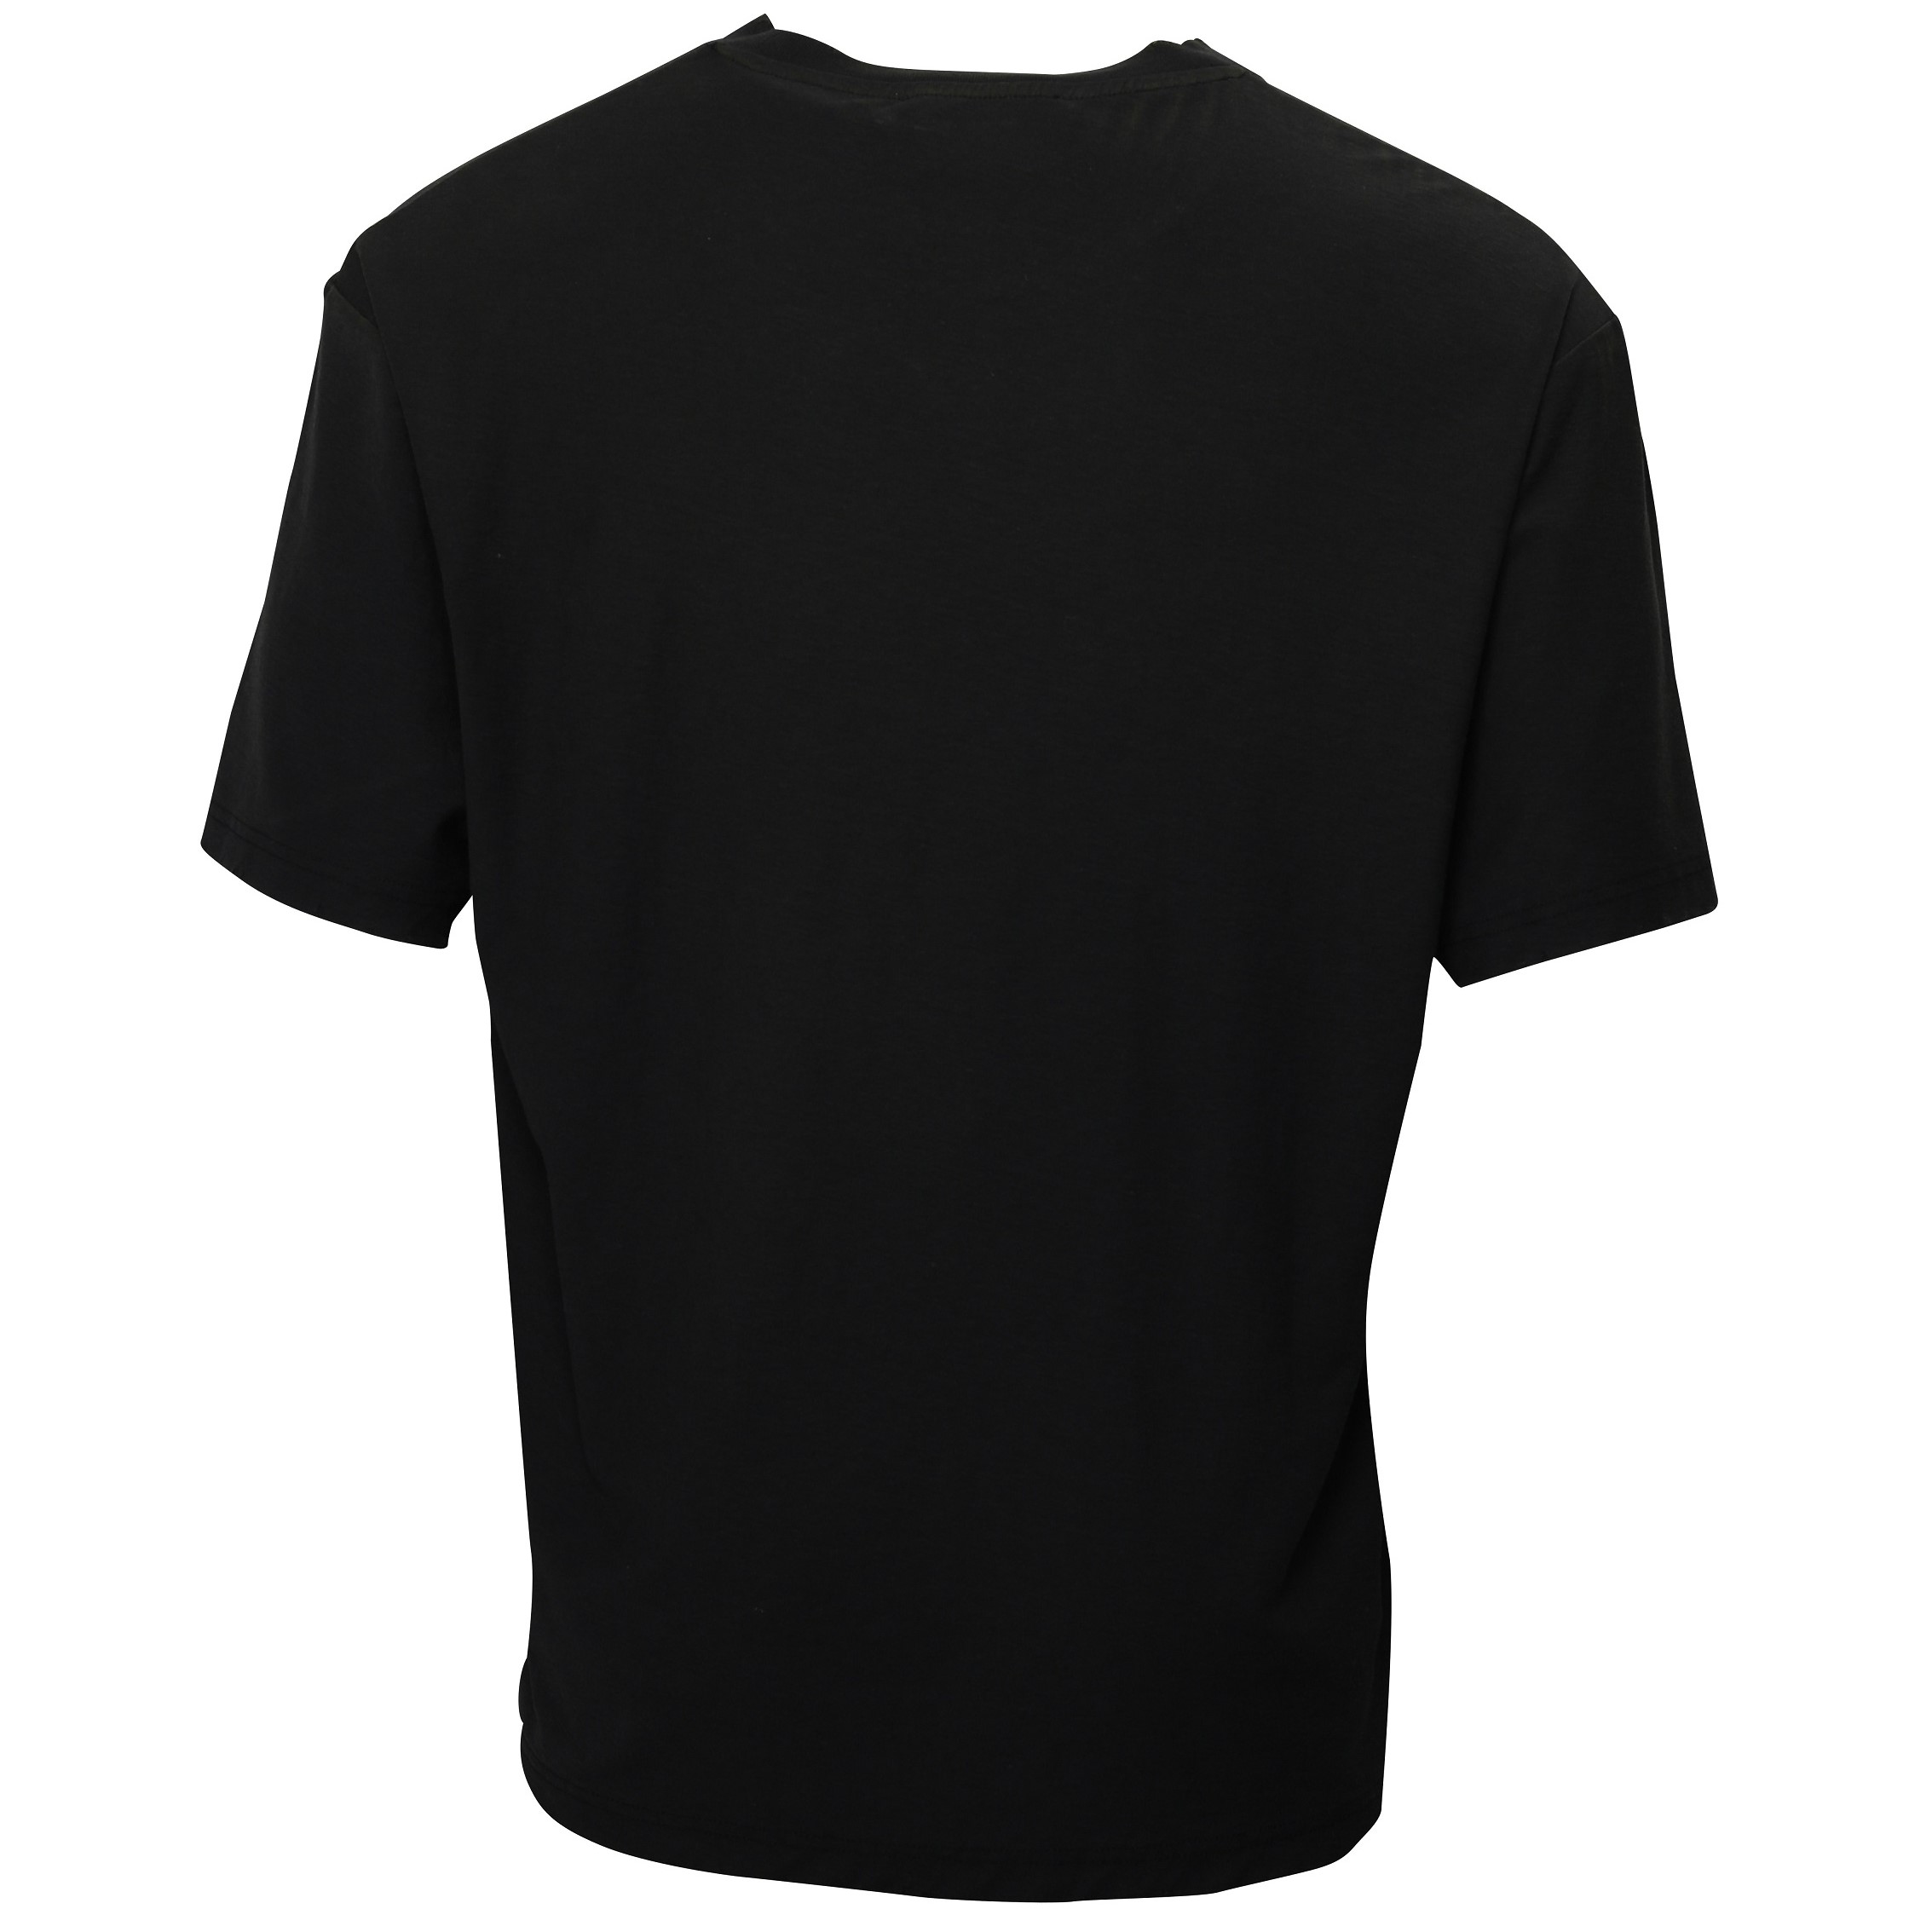 ACNE STUDIOS Logo T-Shirt in Faded Black